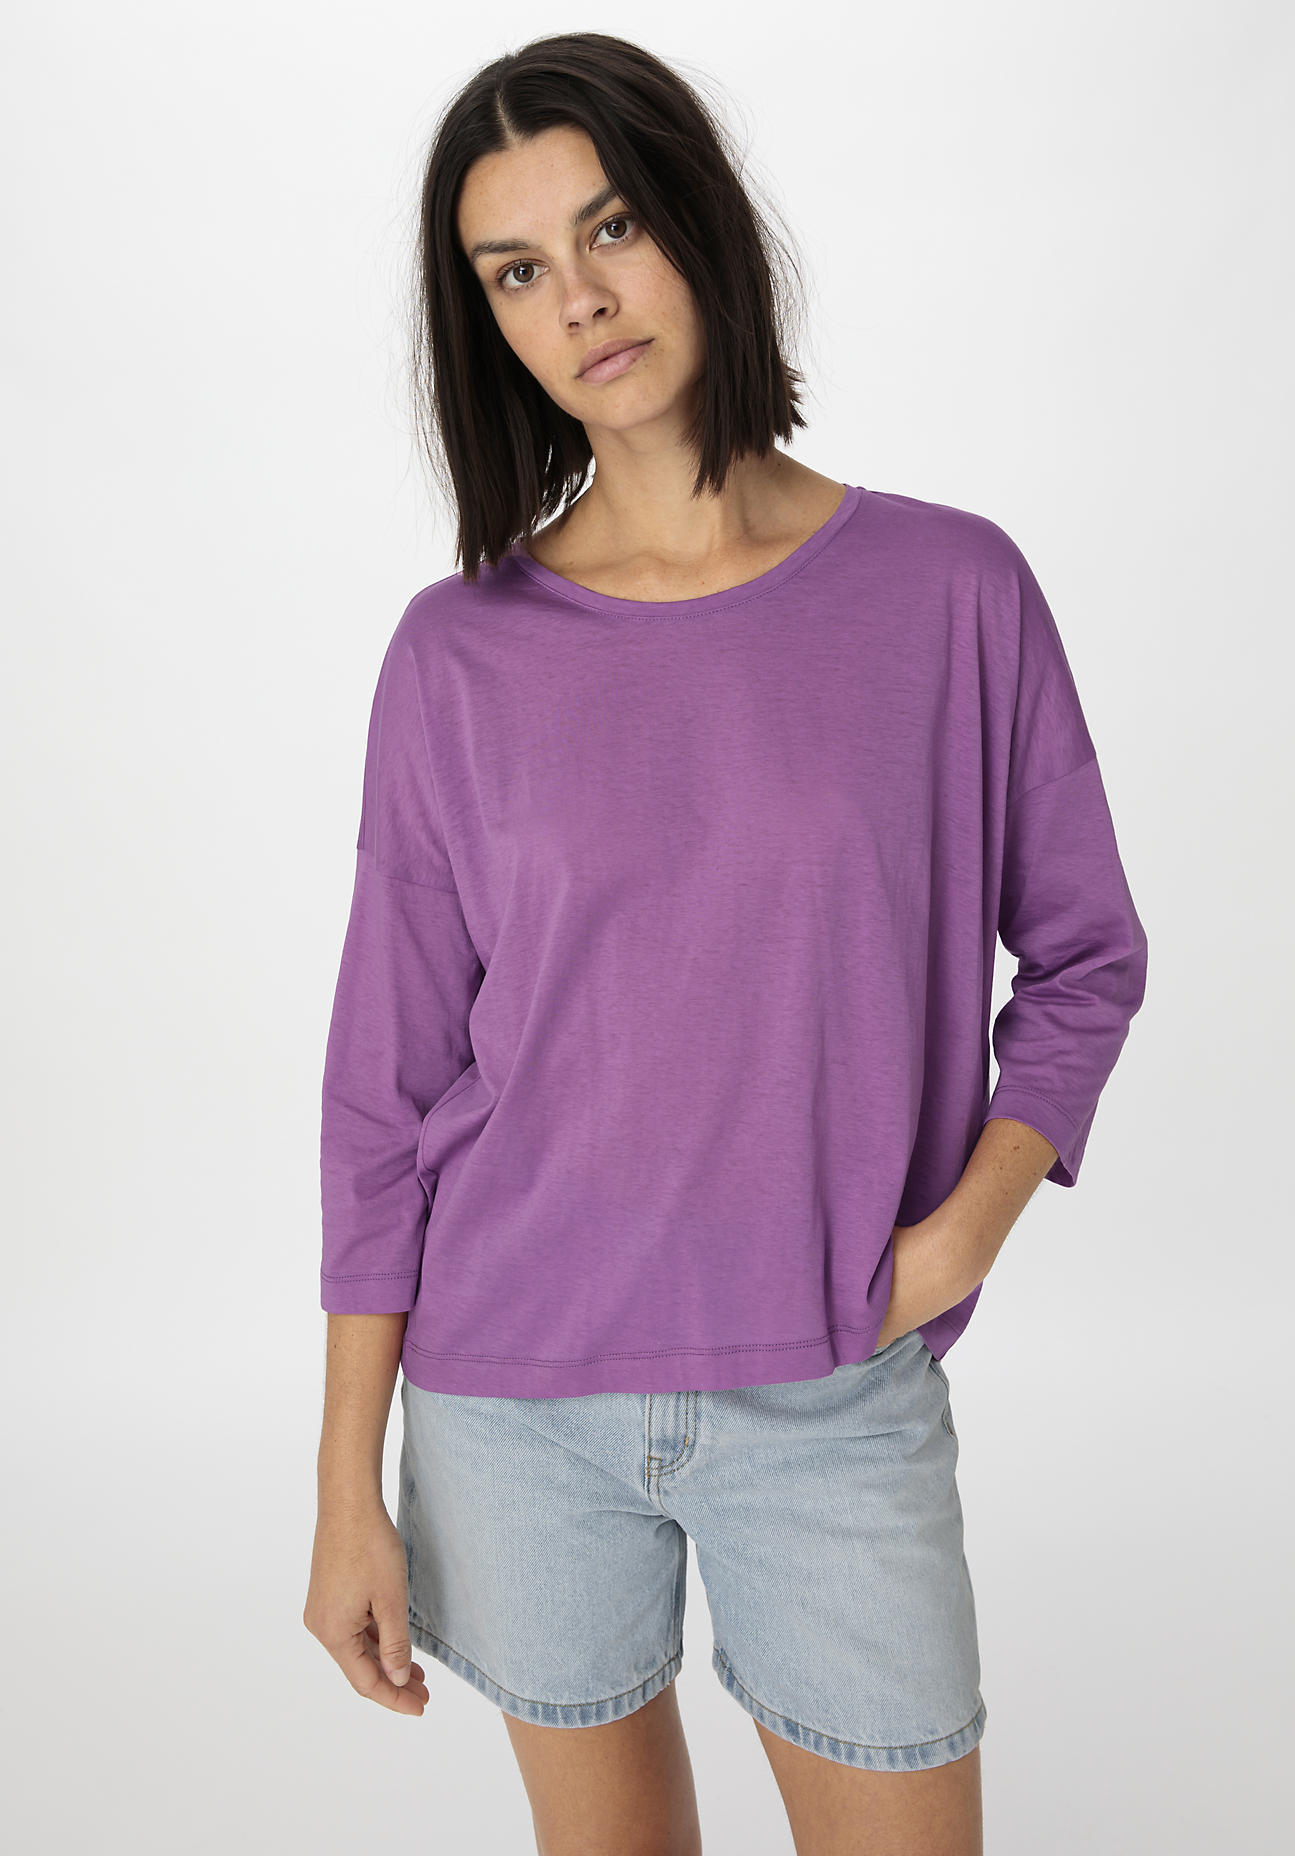 hessnatur Damen Premium Light Shirt Oversized aus Bio-Baumwolle - lila - Größe XS